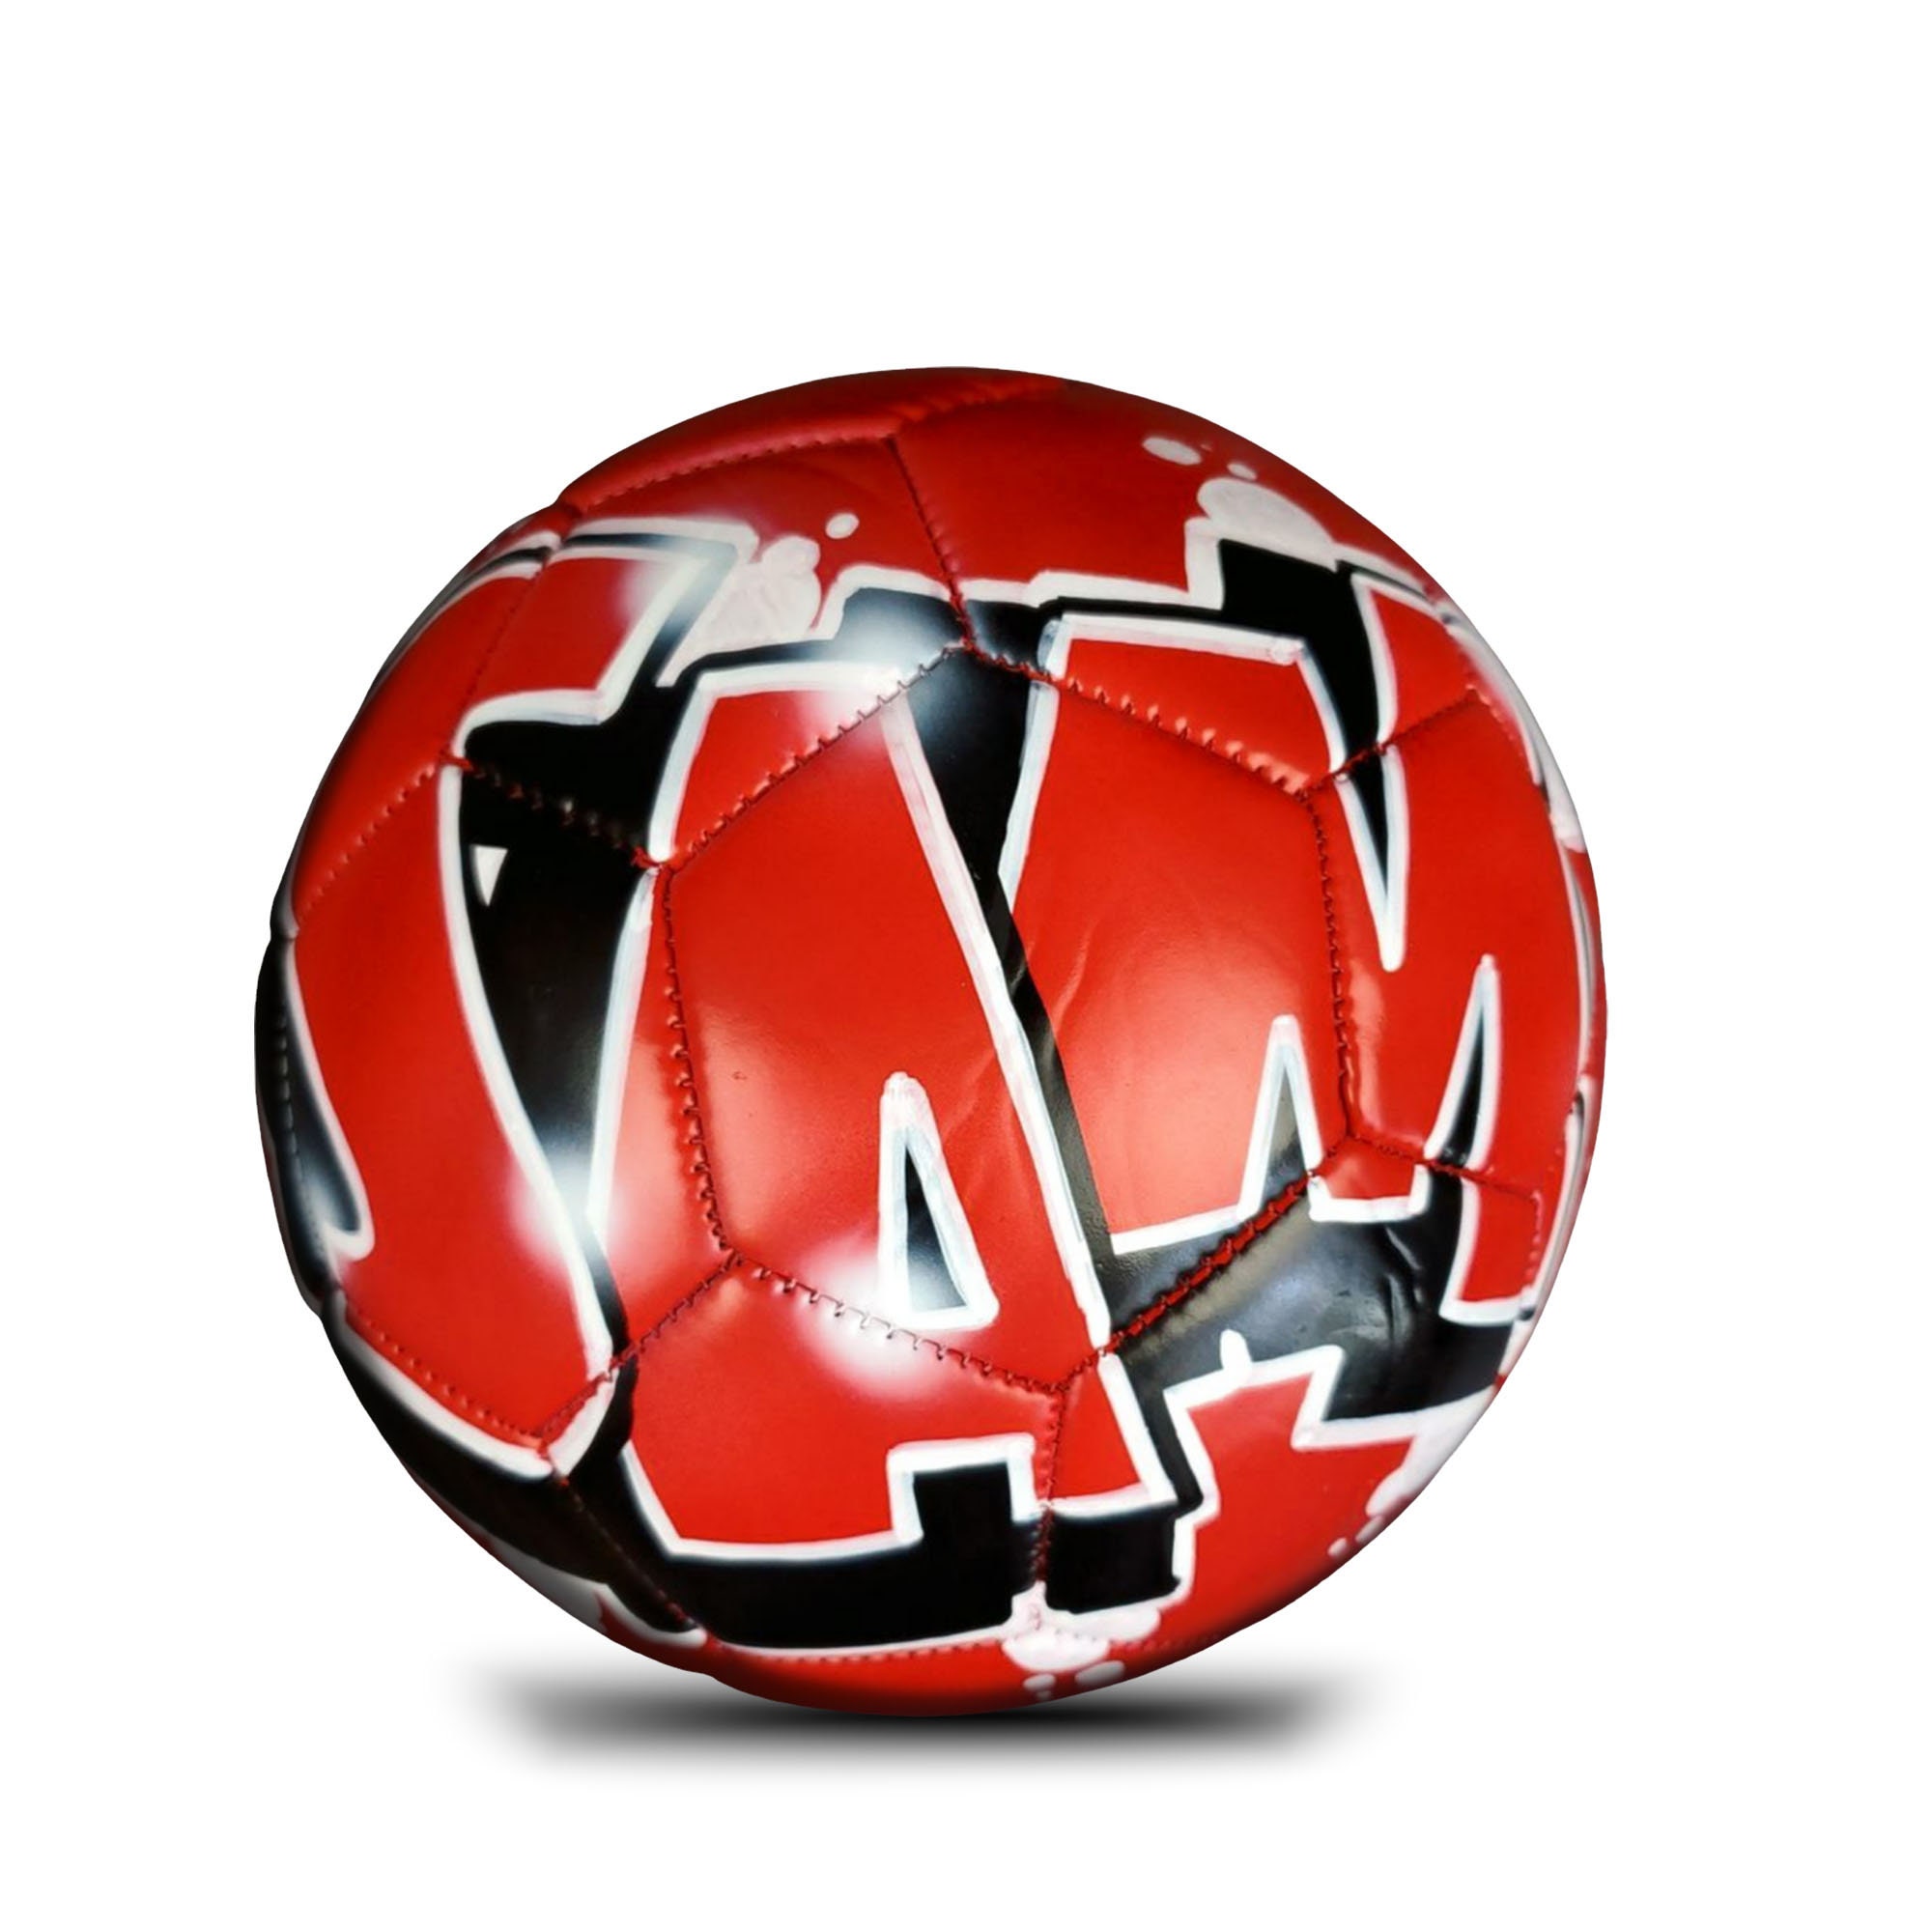 Gobelet ballon de foot personnalisé avec prénom - Nessygan